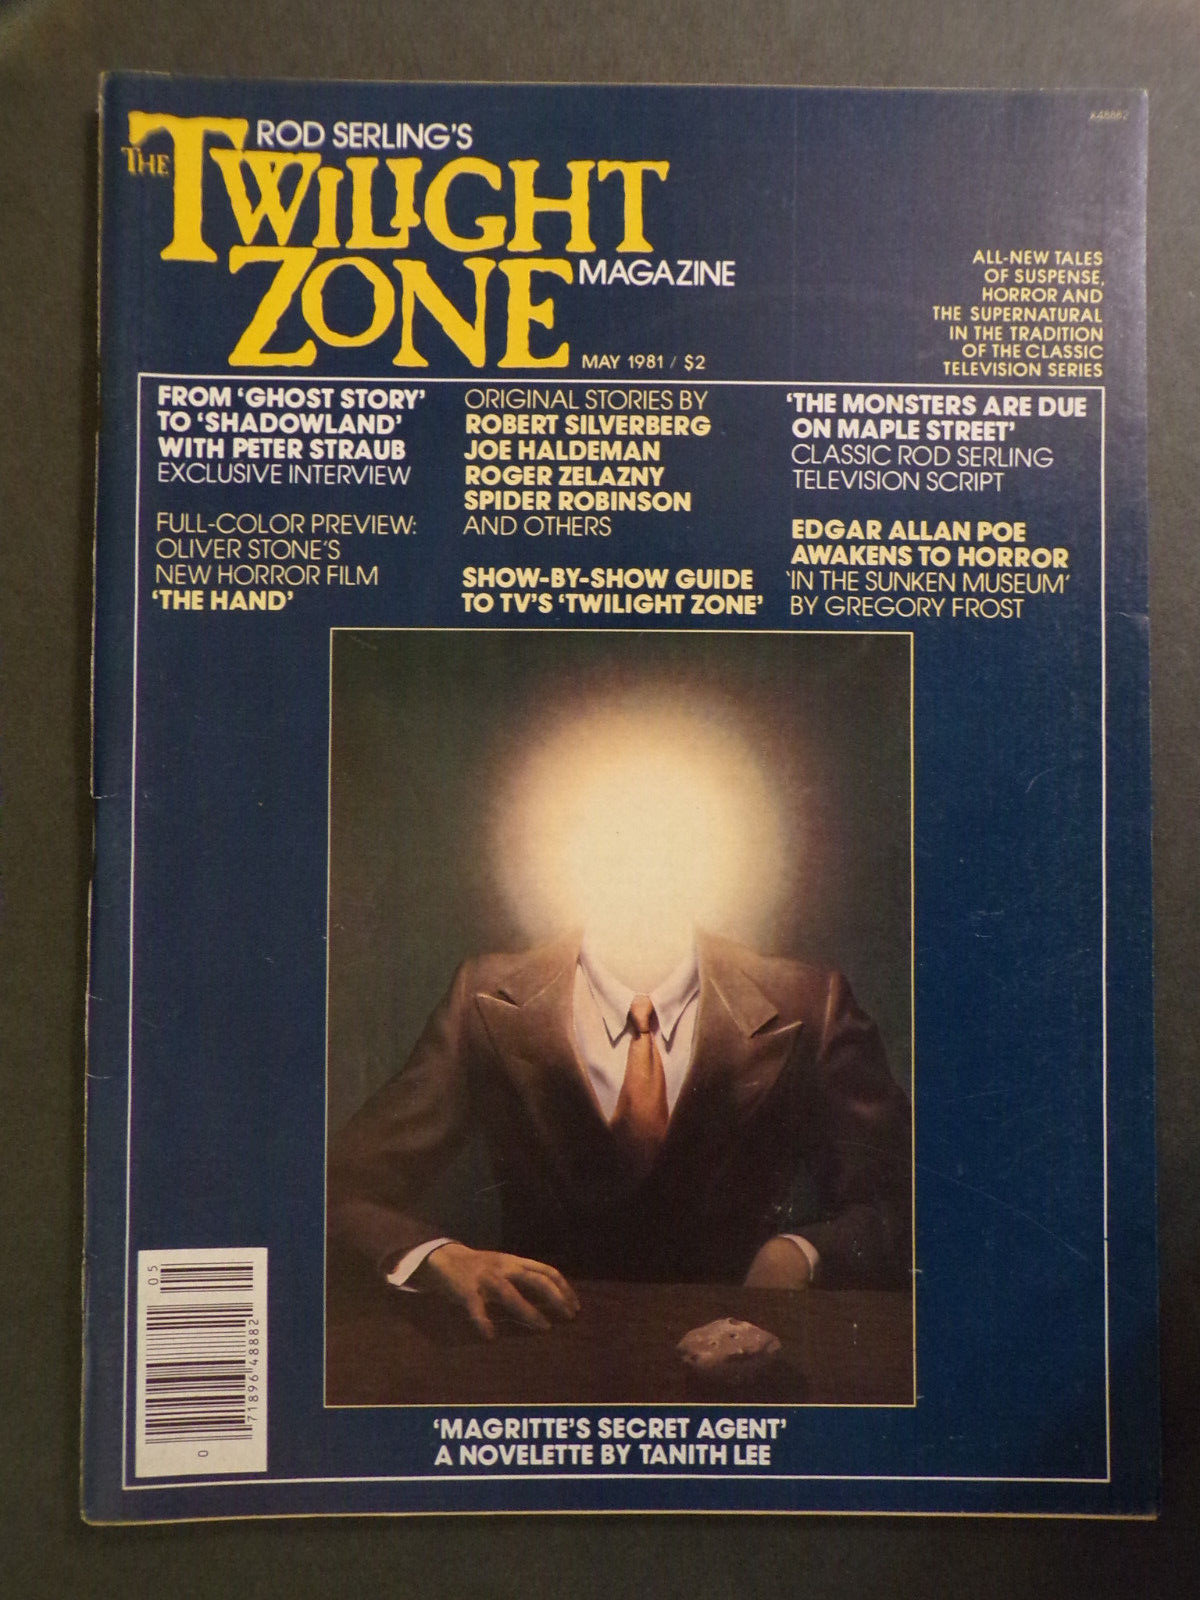 The Twilight Zone #2 (Rod Serling 1981) J102